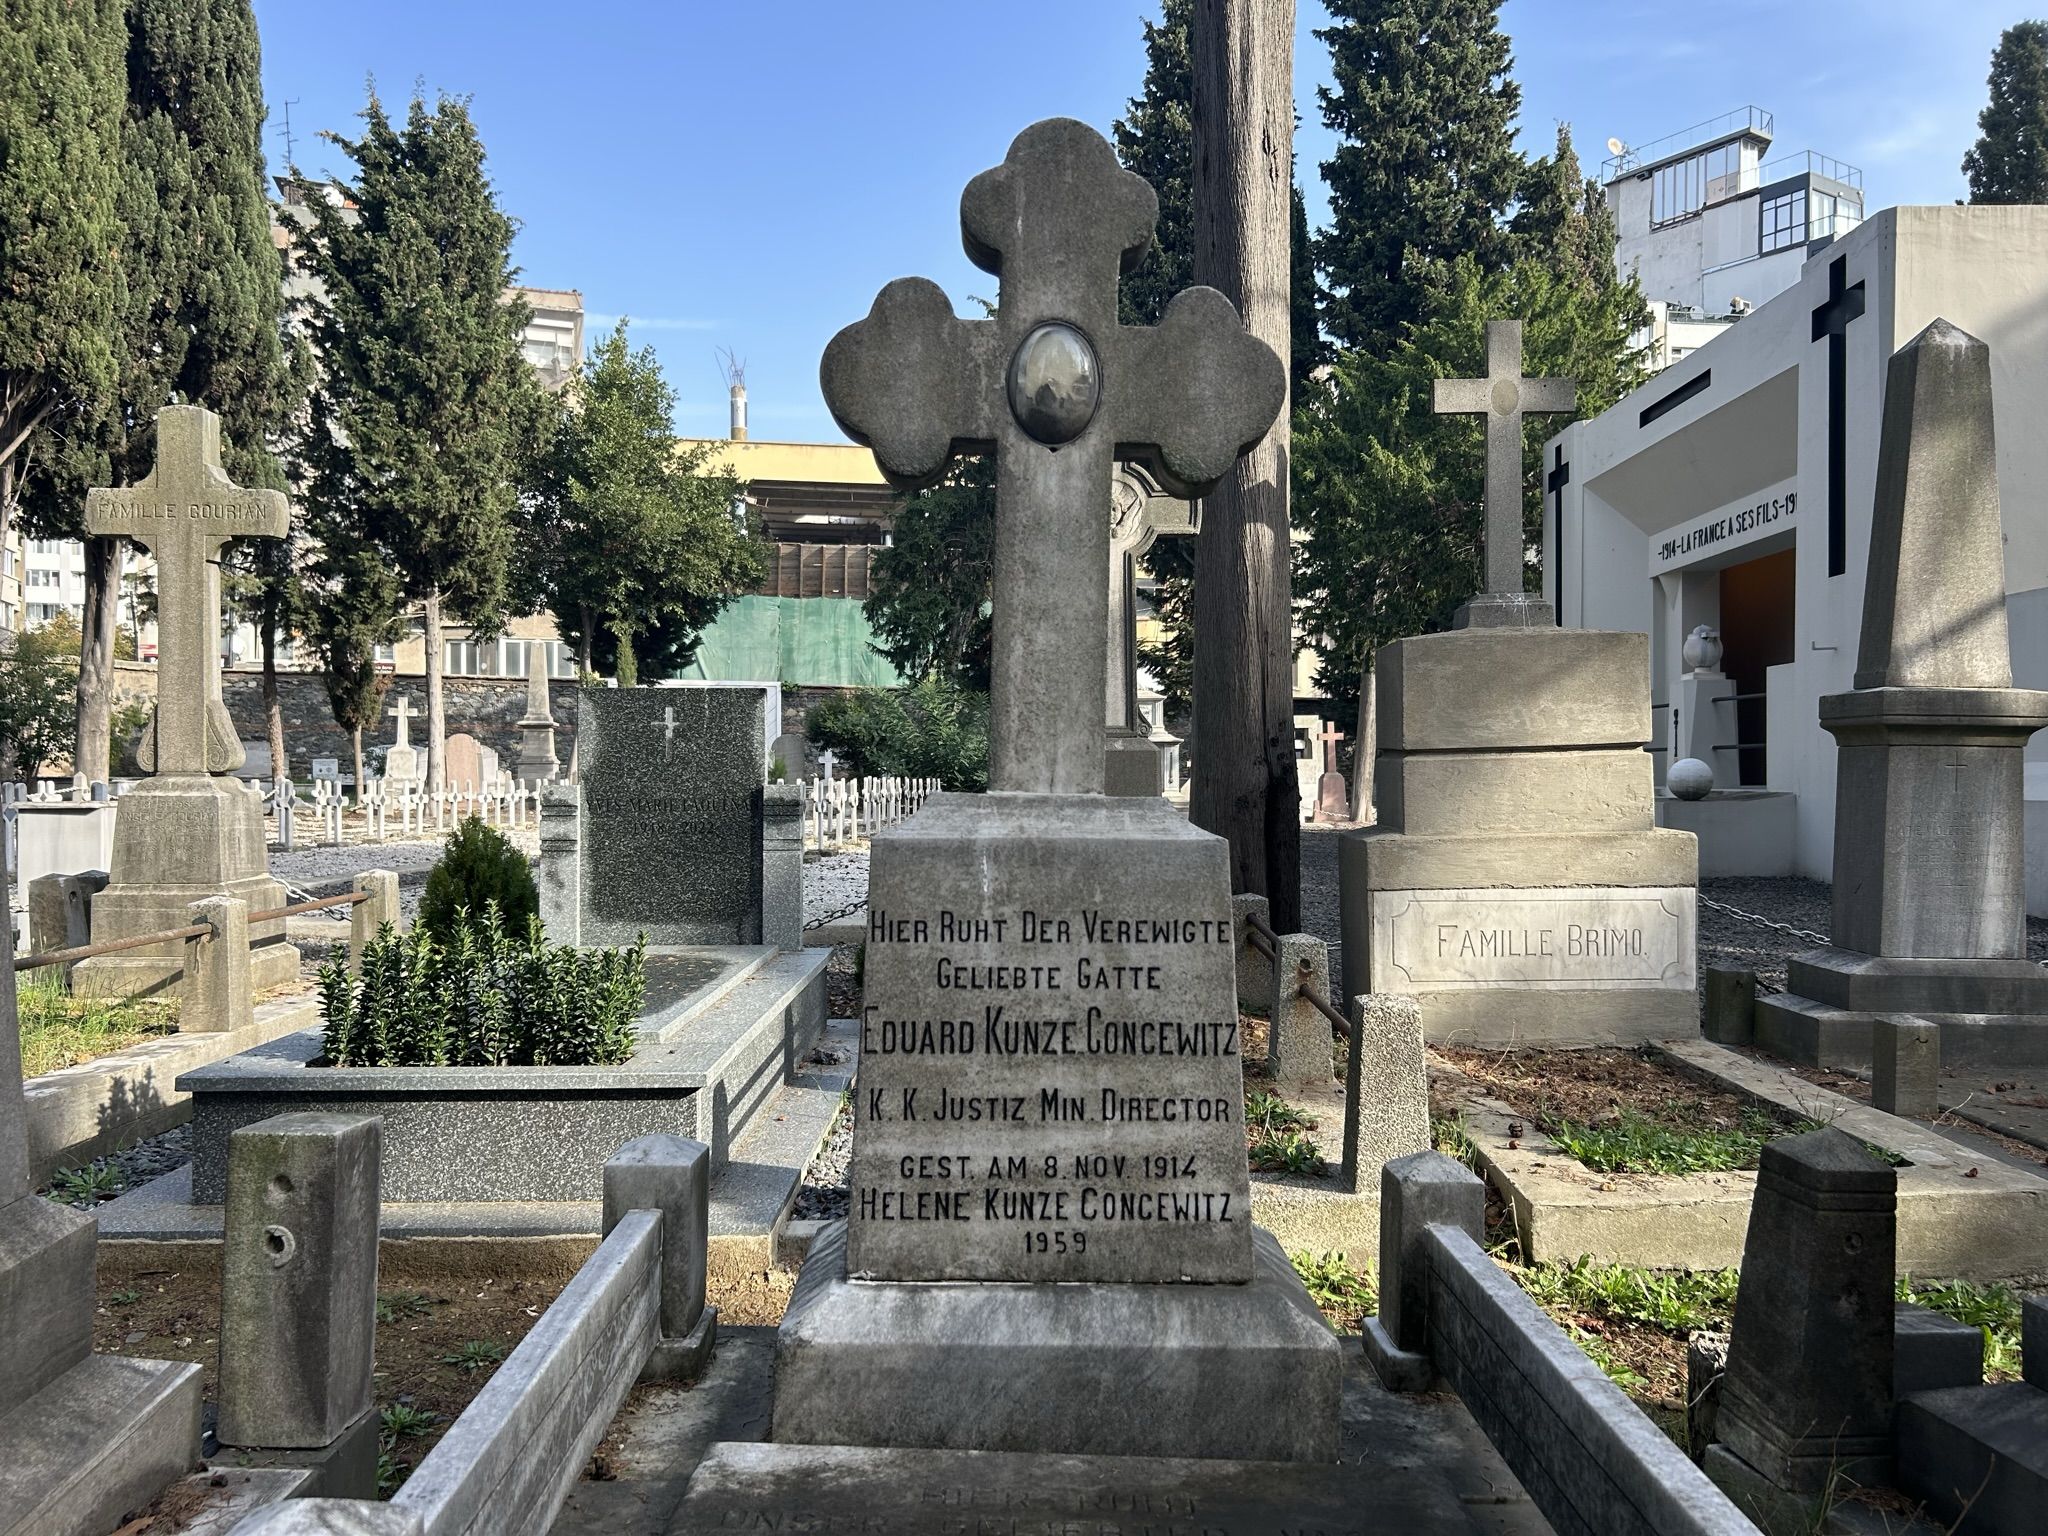 Nagrobek rodziny Concewitz, cmentarz katolicki w Feriköy